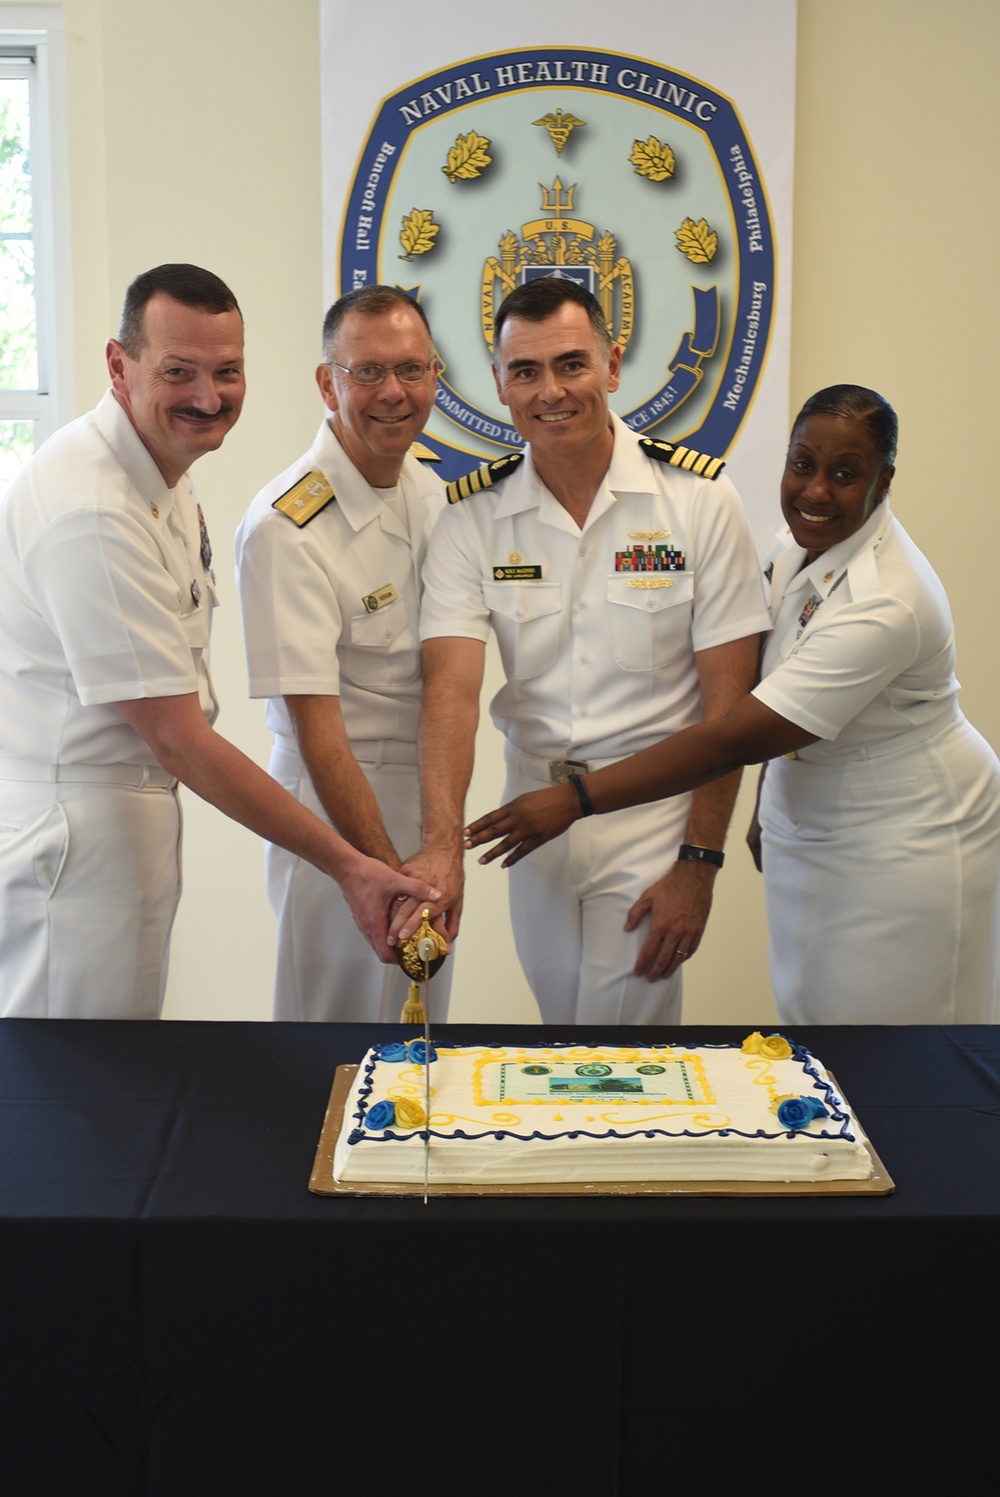 Naval Branch Health Clinic Philadelphia re-opens doors after $6.5 million renovation